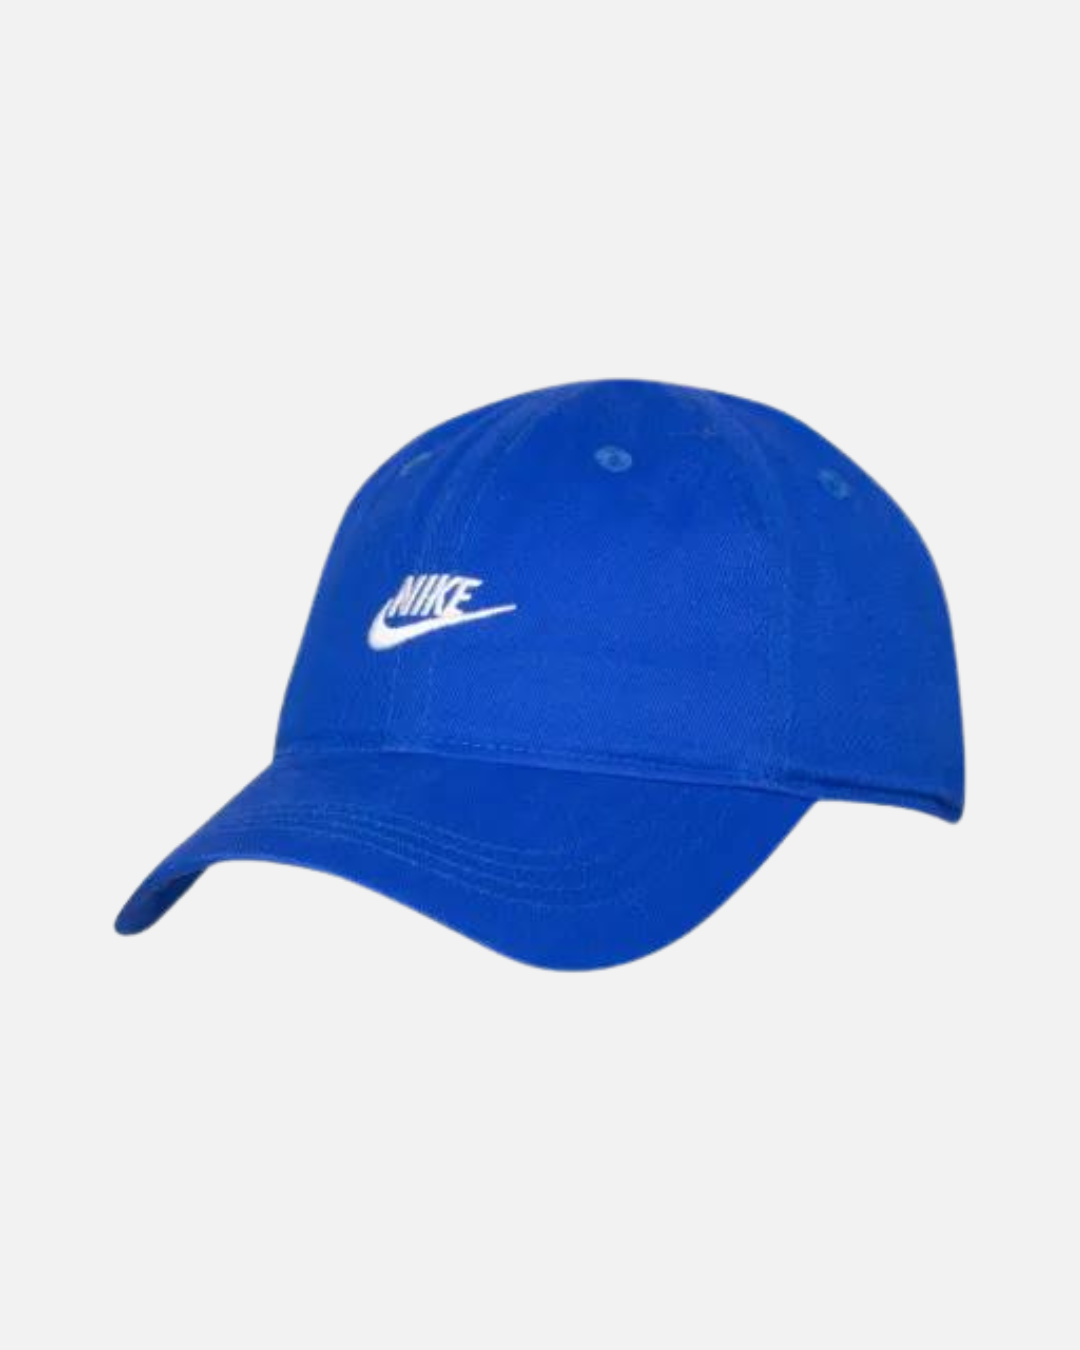 Nike Future Baby Cap - Blue